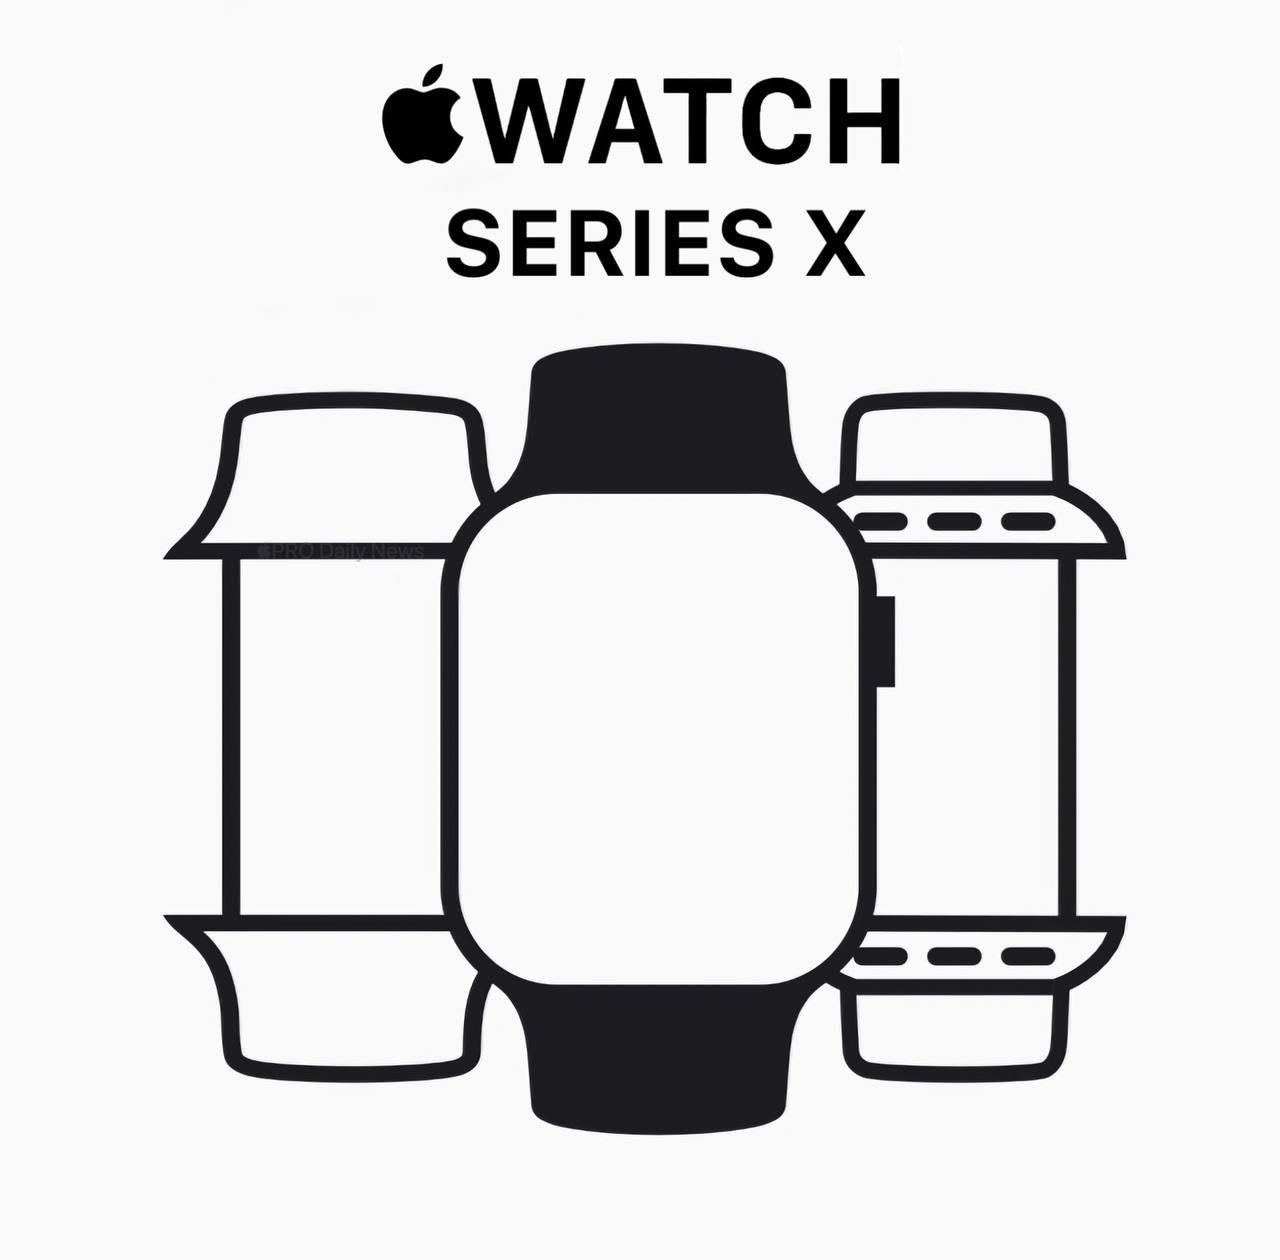 Apple Watch Series X будут аналогичны выпуску iPhone X, судя по всему